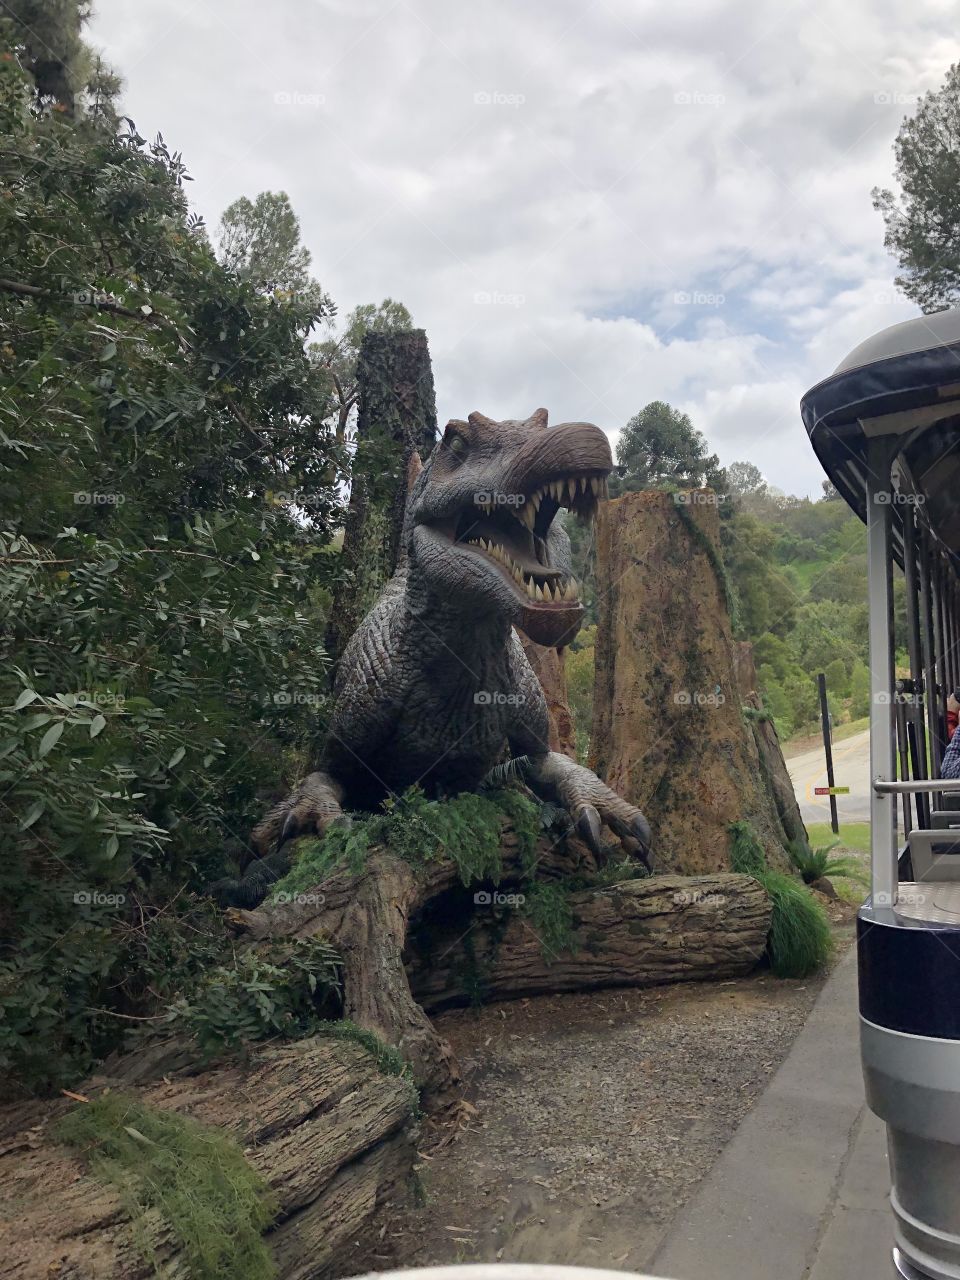 Dinosaur at universal studios, Hollywood, on the tram tour.